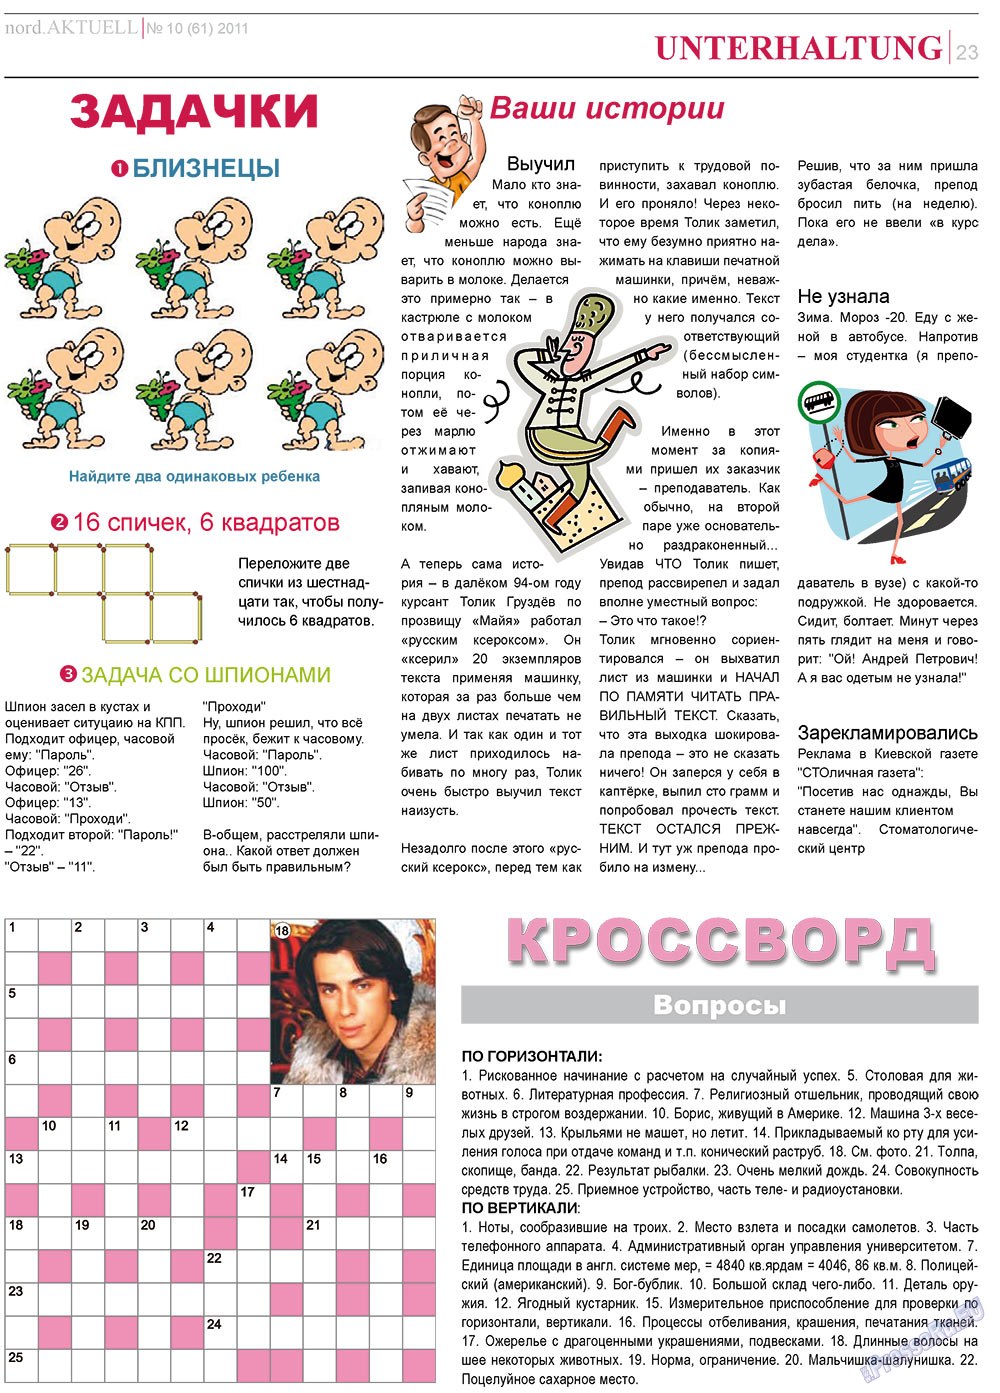 nord.Aktuell (газета). 2011 год, номер 10, стр. 23